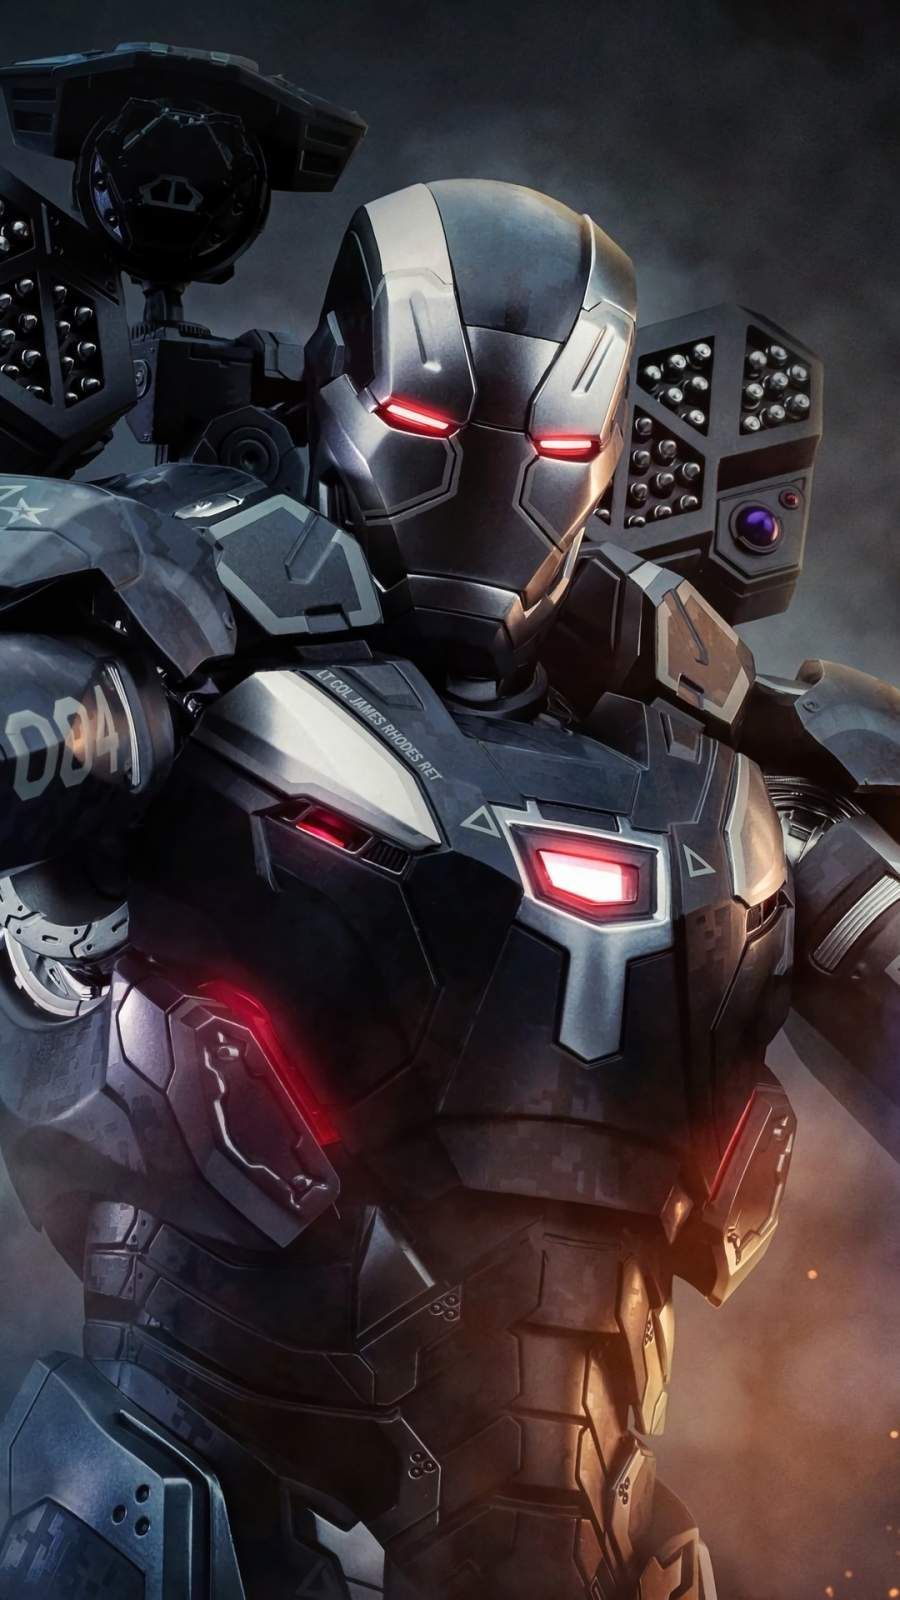 War Machine 4k iPhone Wallpaper. Iron man avengers, Iron man, Marvel superhero posters